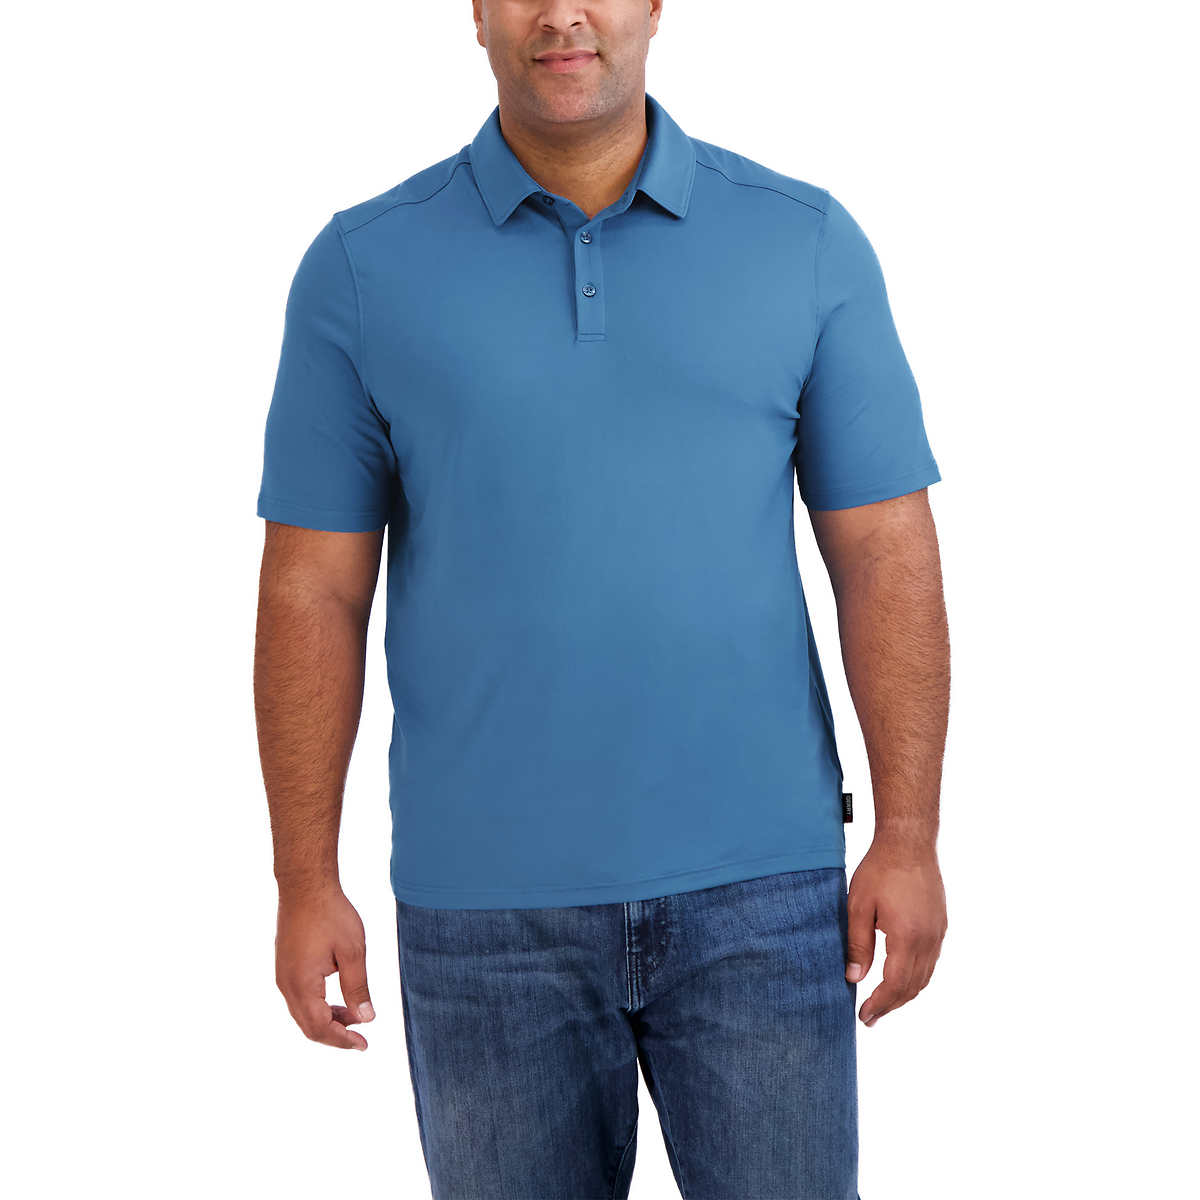 Costco Members: 2x Gerry Men’s Polo Shirt $9.94